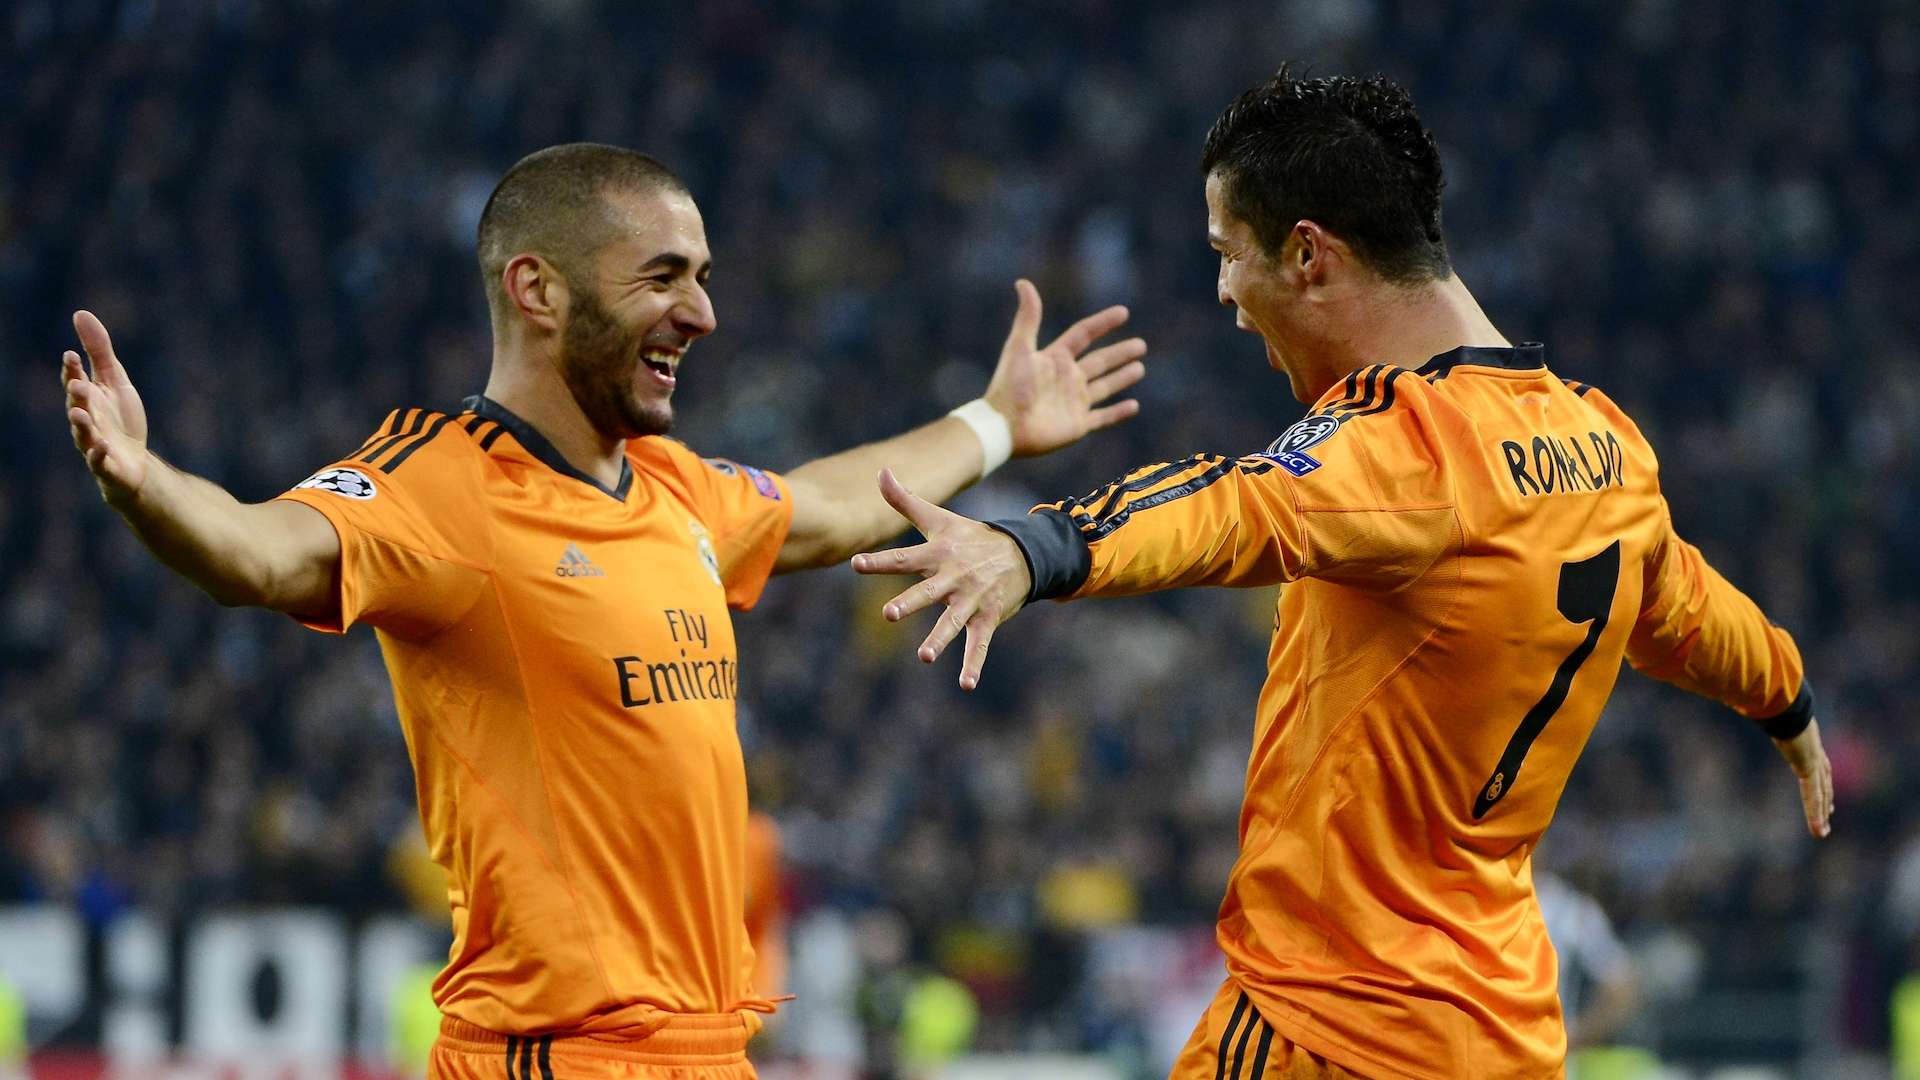 Karim Benzema & Cristiano Ronaldo - Real Madrid 2013/14